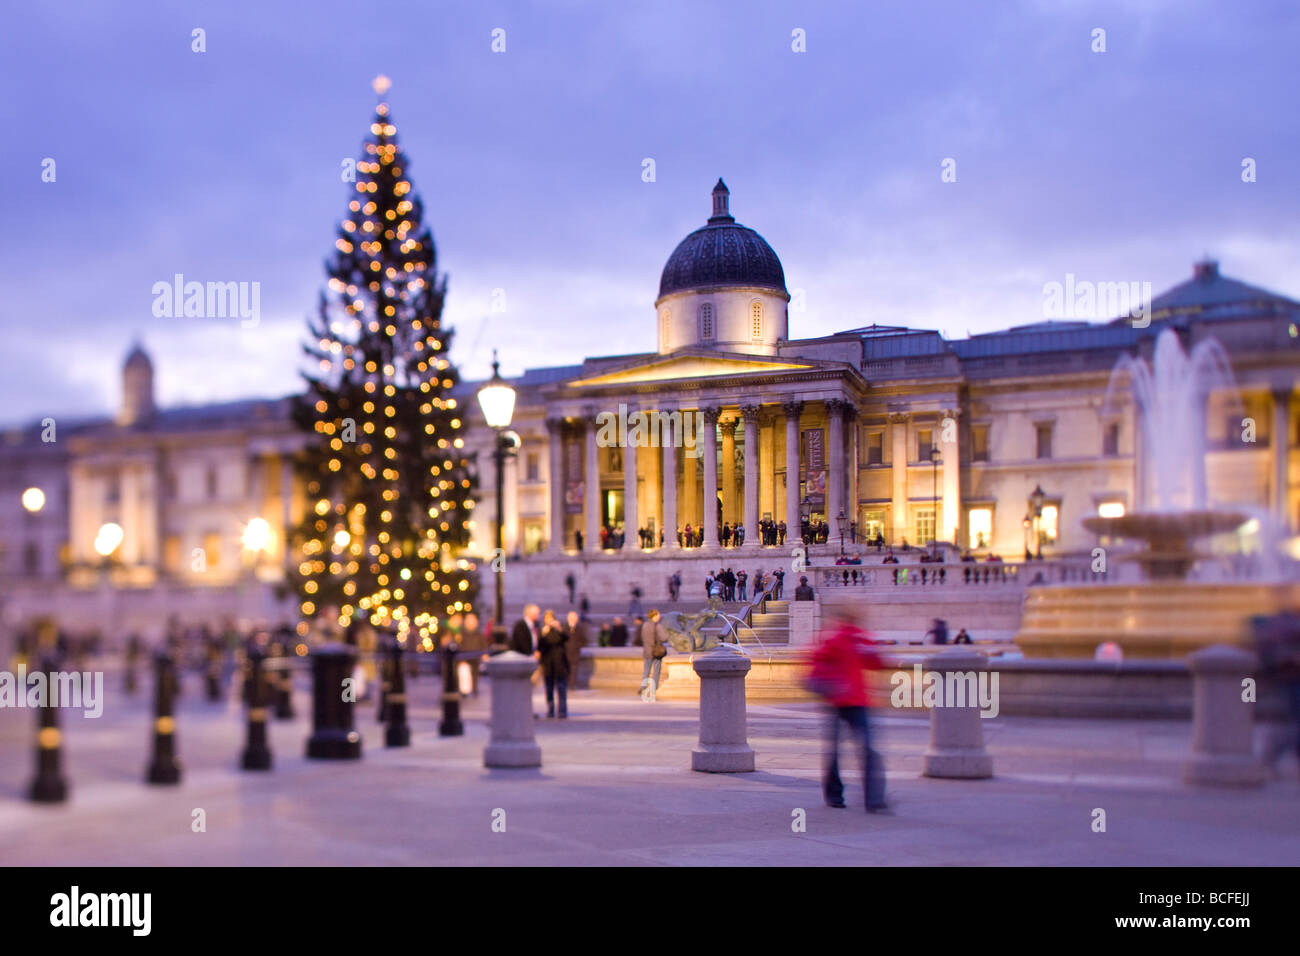 National Portrait Gallery & Trafalgar Square at Christmas, London, England Stock Photo